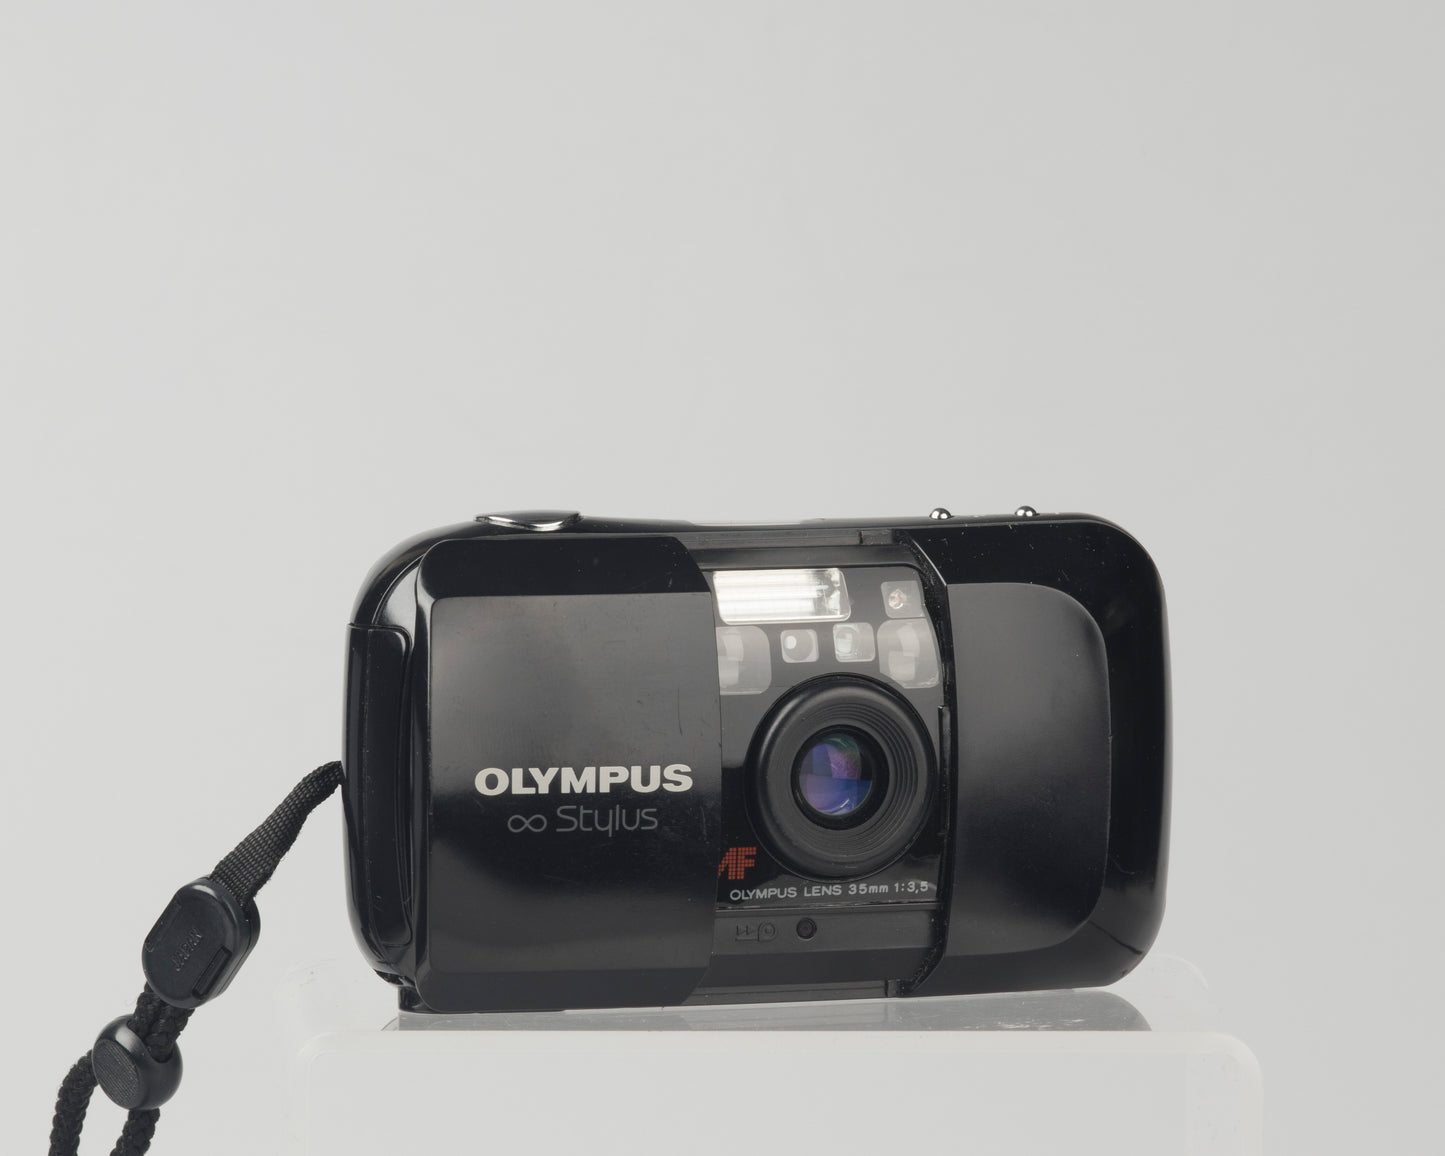 Olympus Infinity Stylus (aka Mju I) a classic high quality 35mm point-and-shoot camera